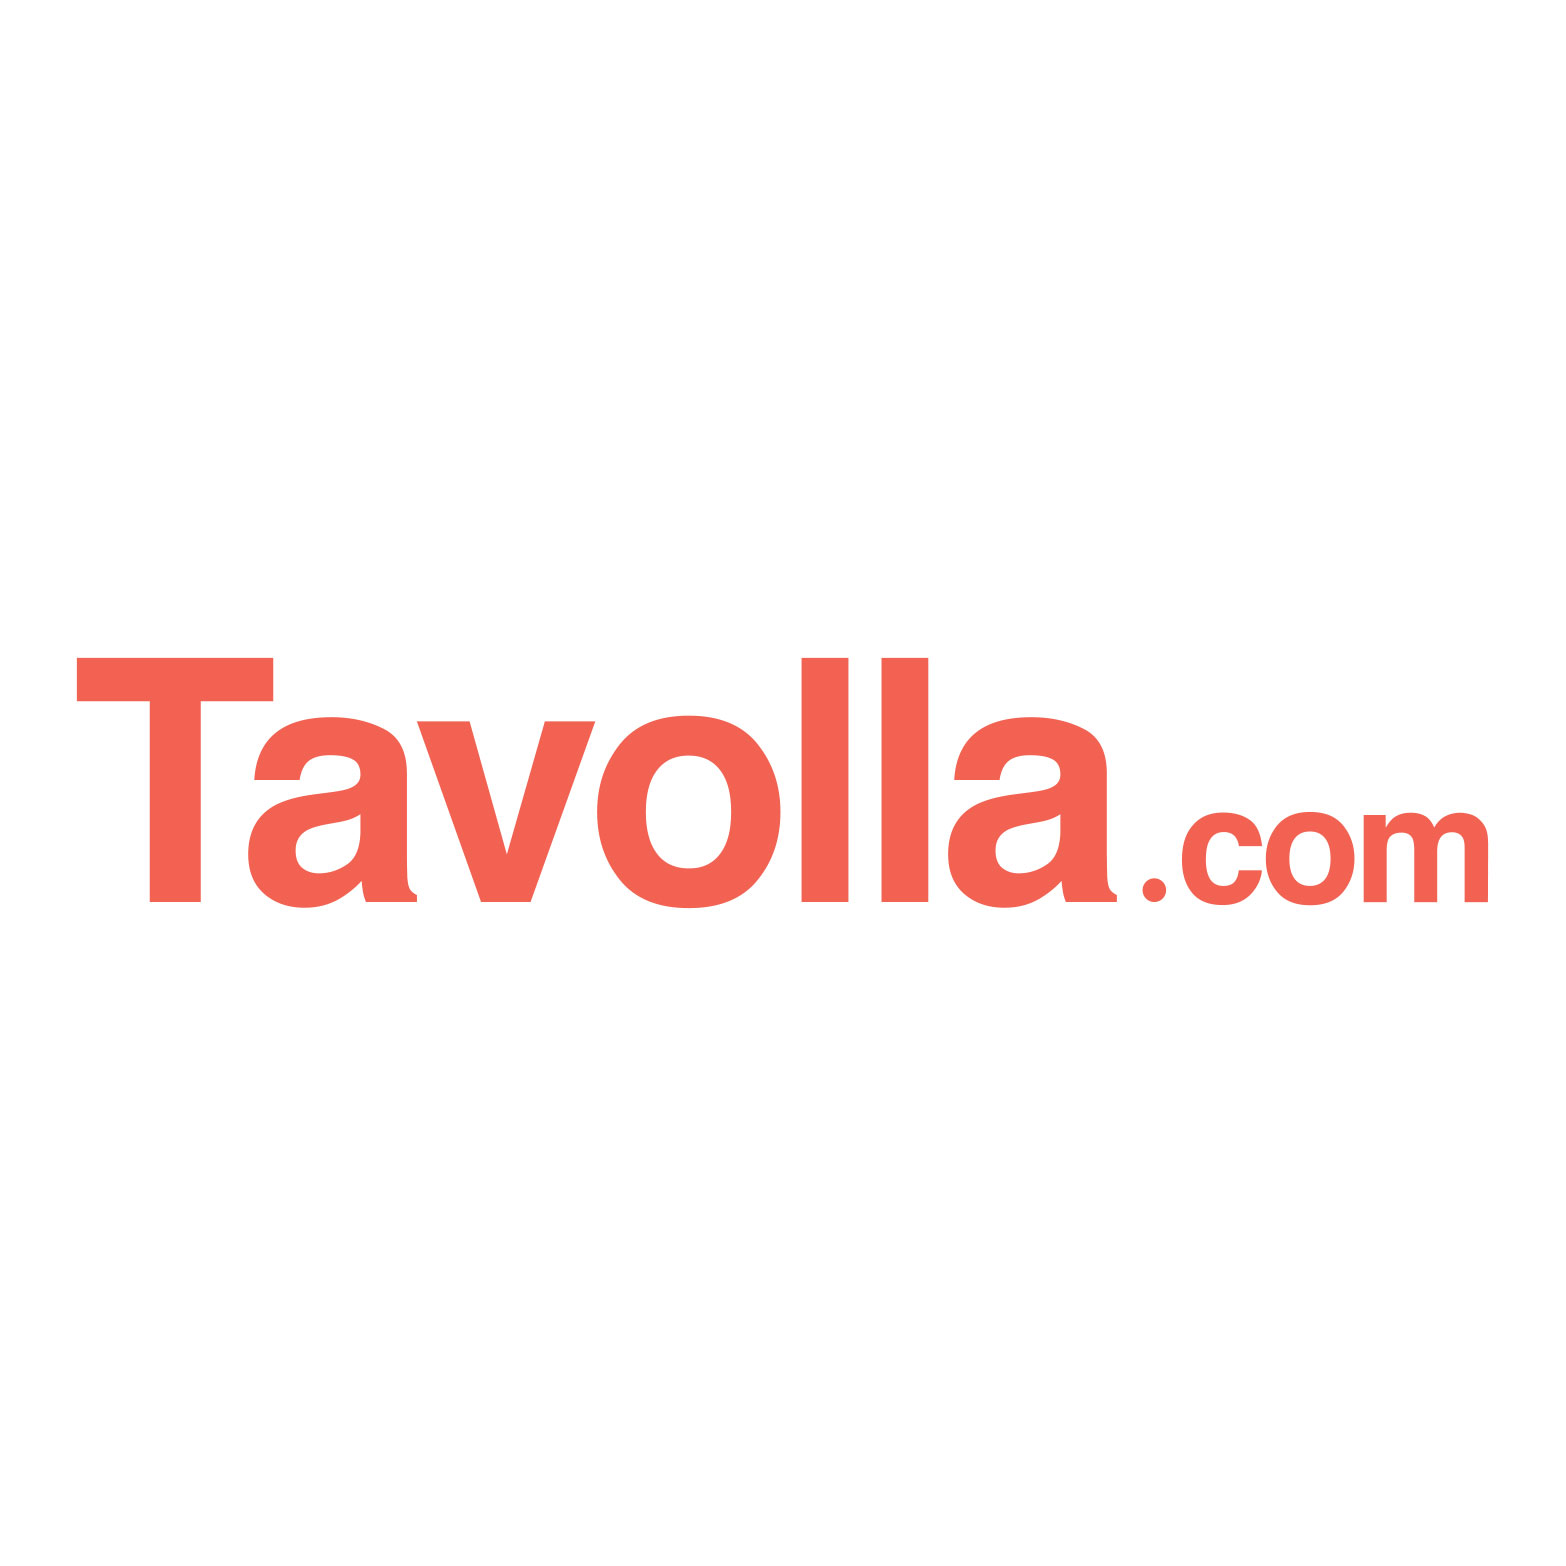 Logo_tavolla_com-1